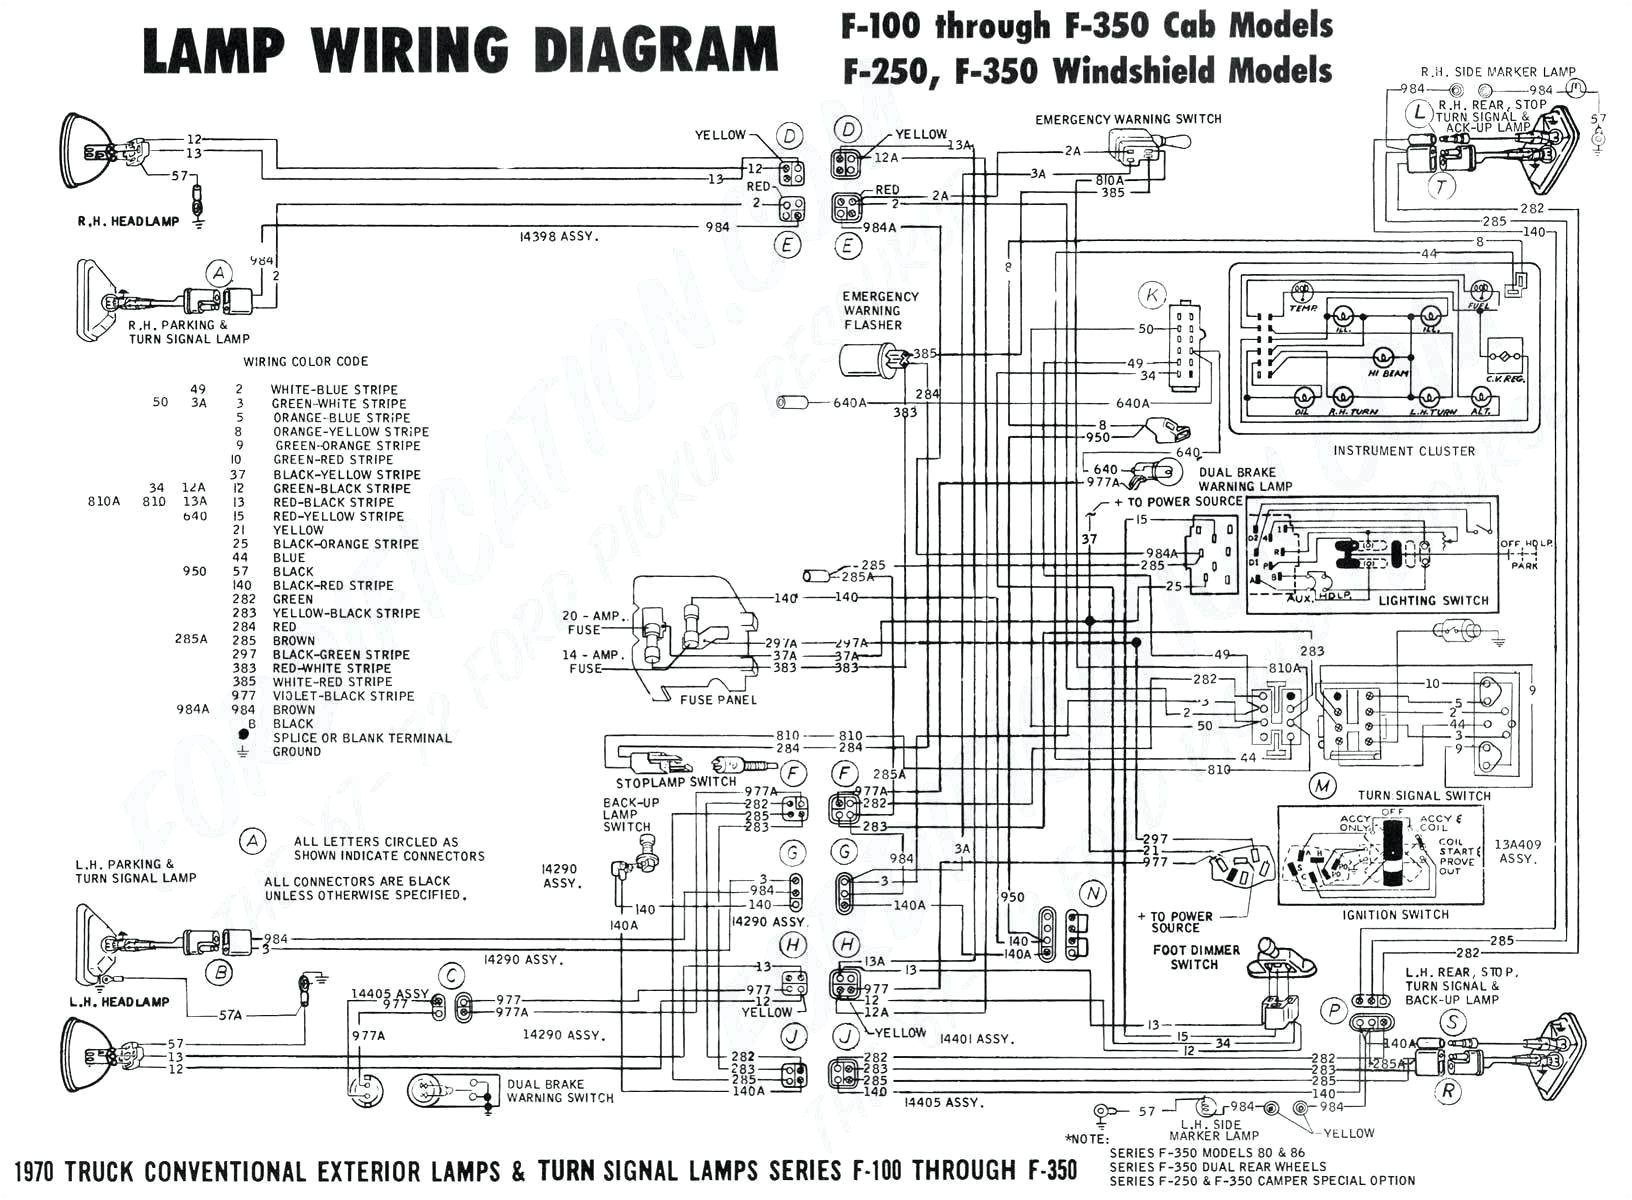 2005 chevy truck wiring diagram wiring diagram database chevy silverado trailer wiring diagram